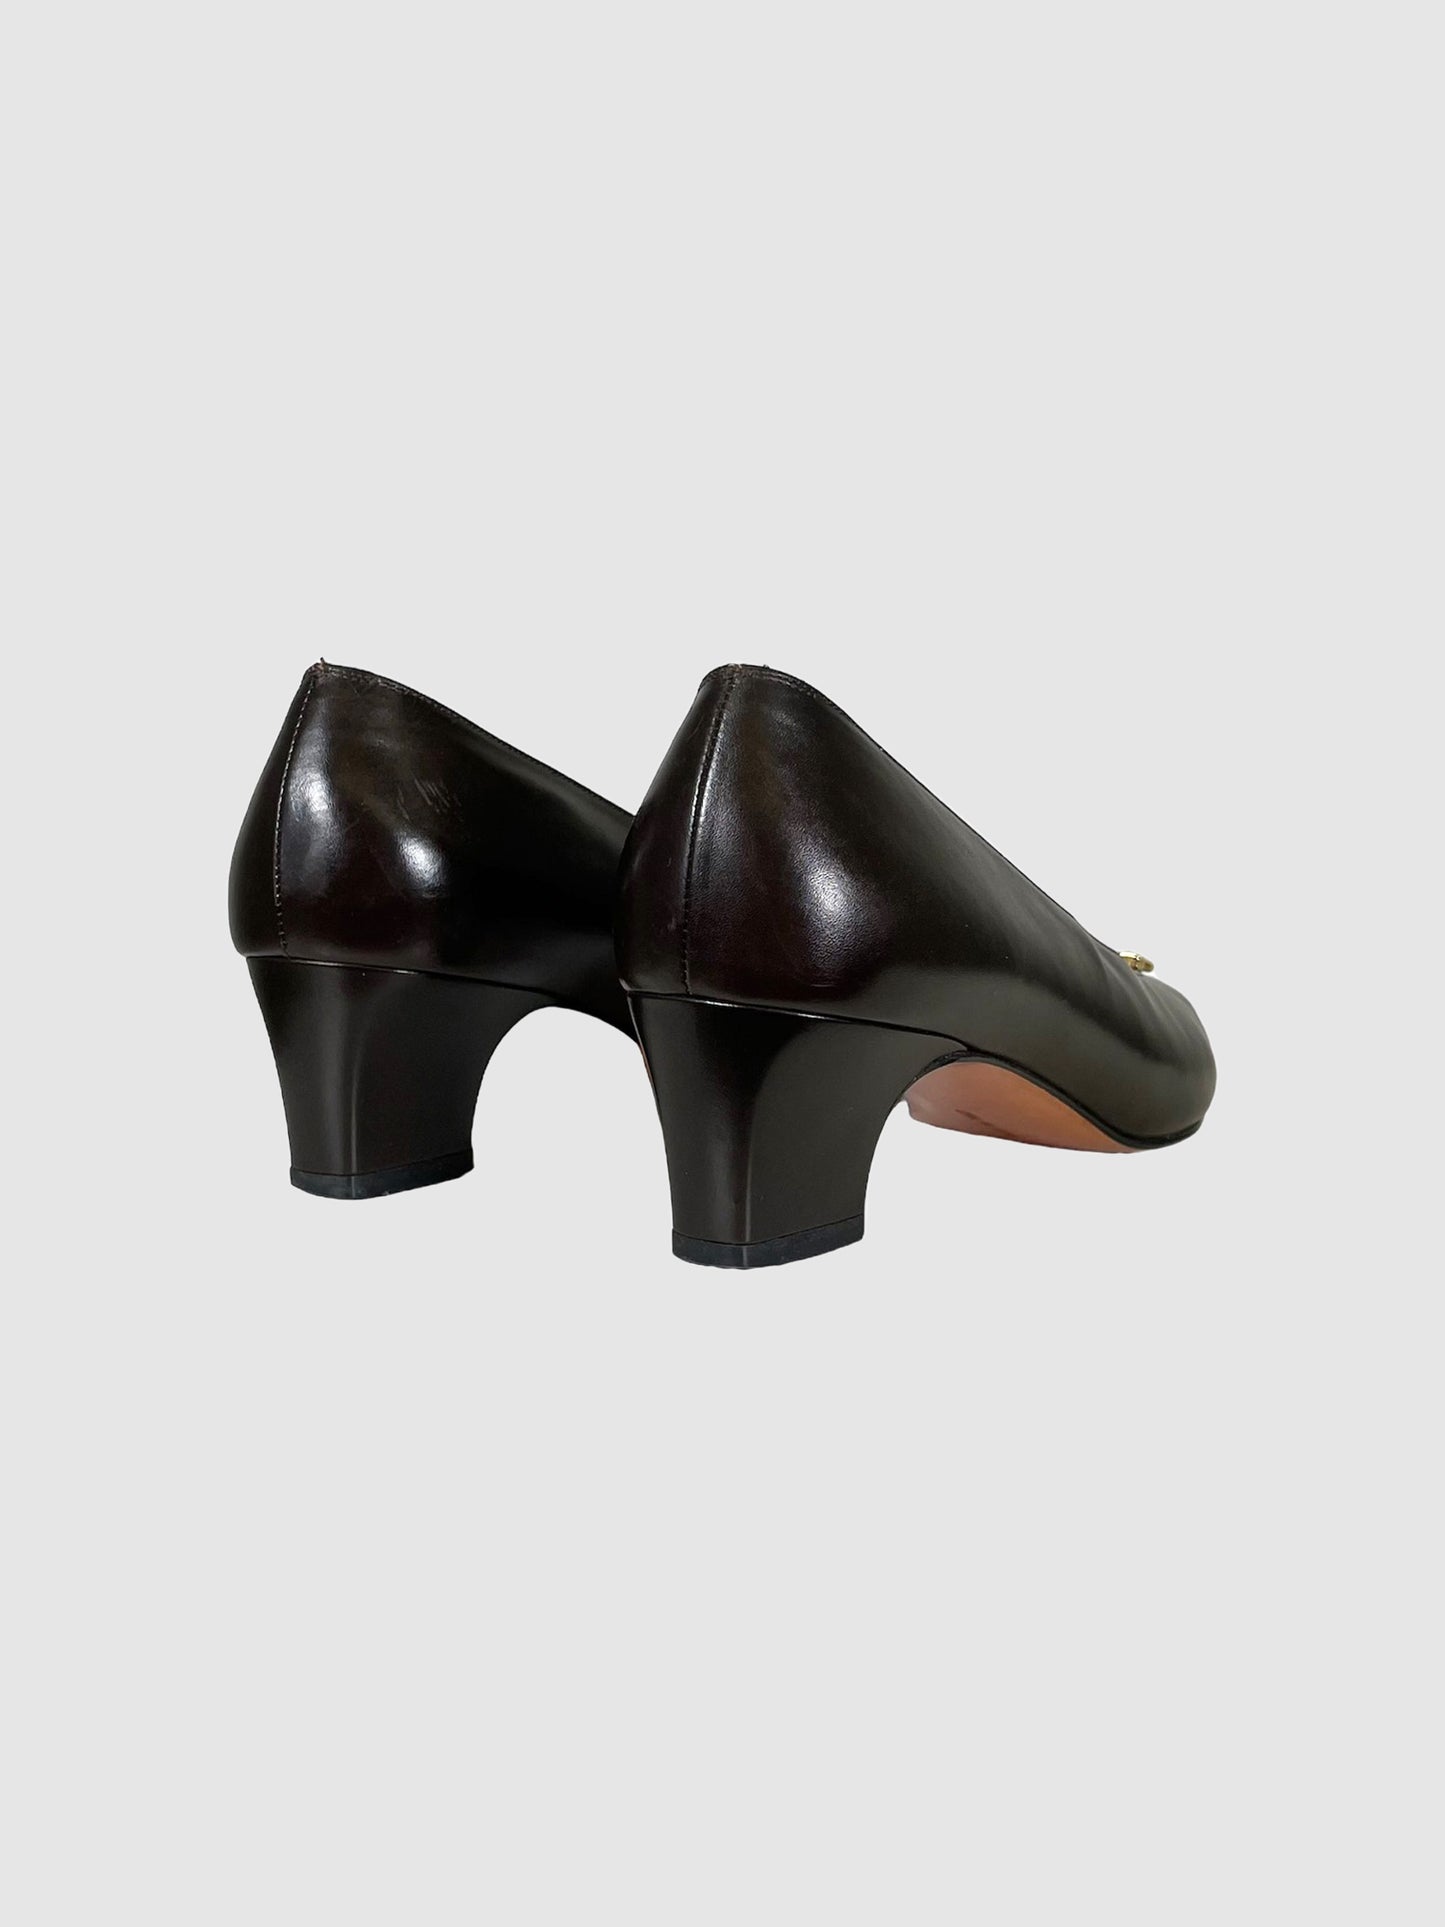 Salvatore Ferragamo Leather Pumps with Horseshoe Accent - Size 7.5